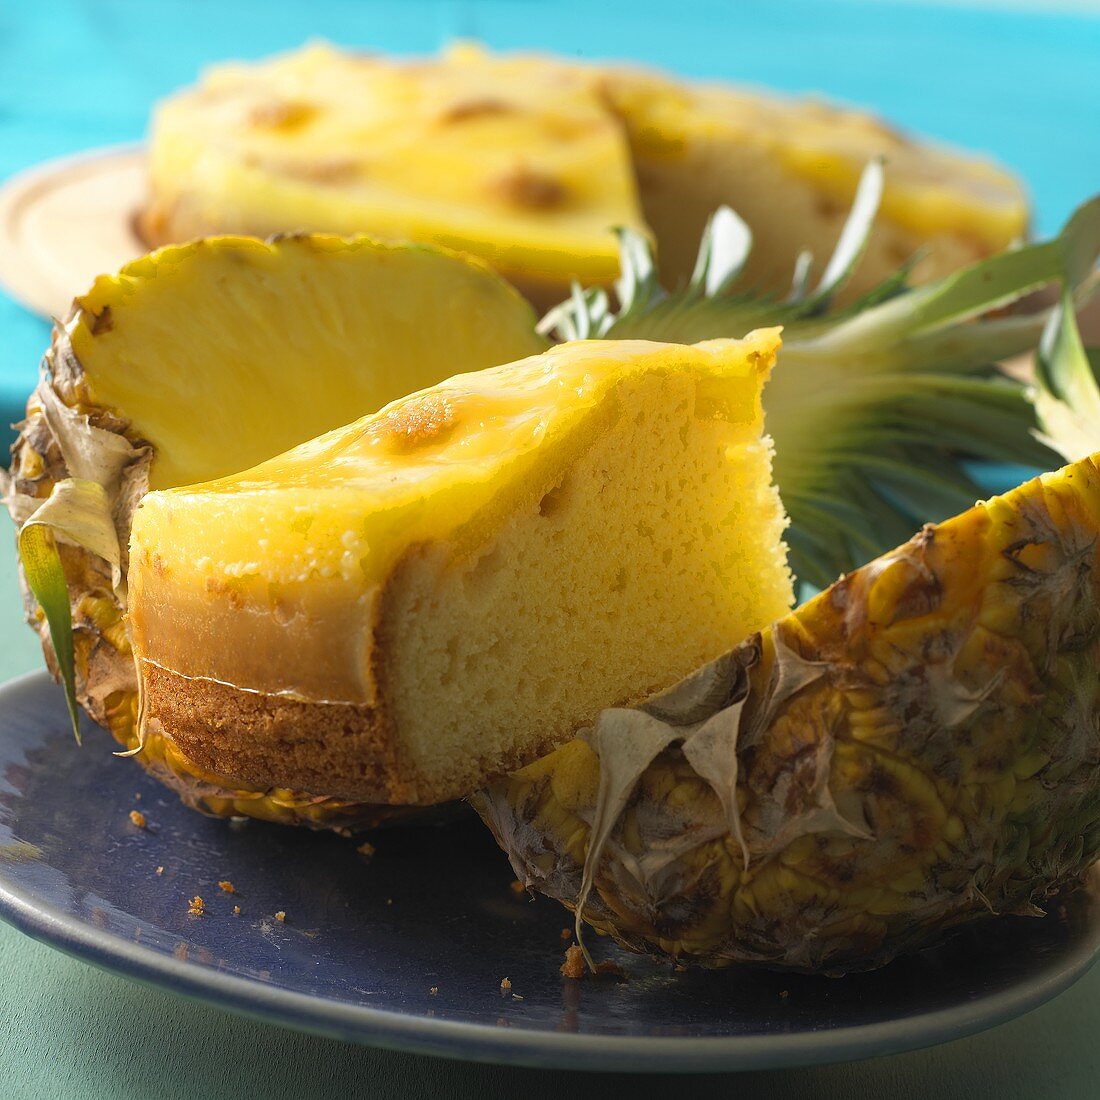 Pineapple cake and fresh pineapple